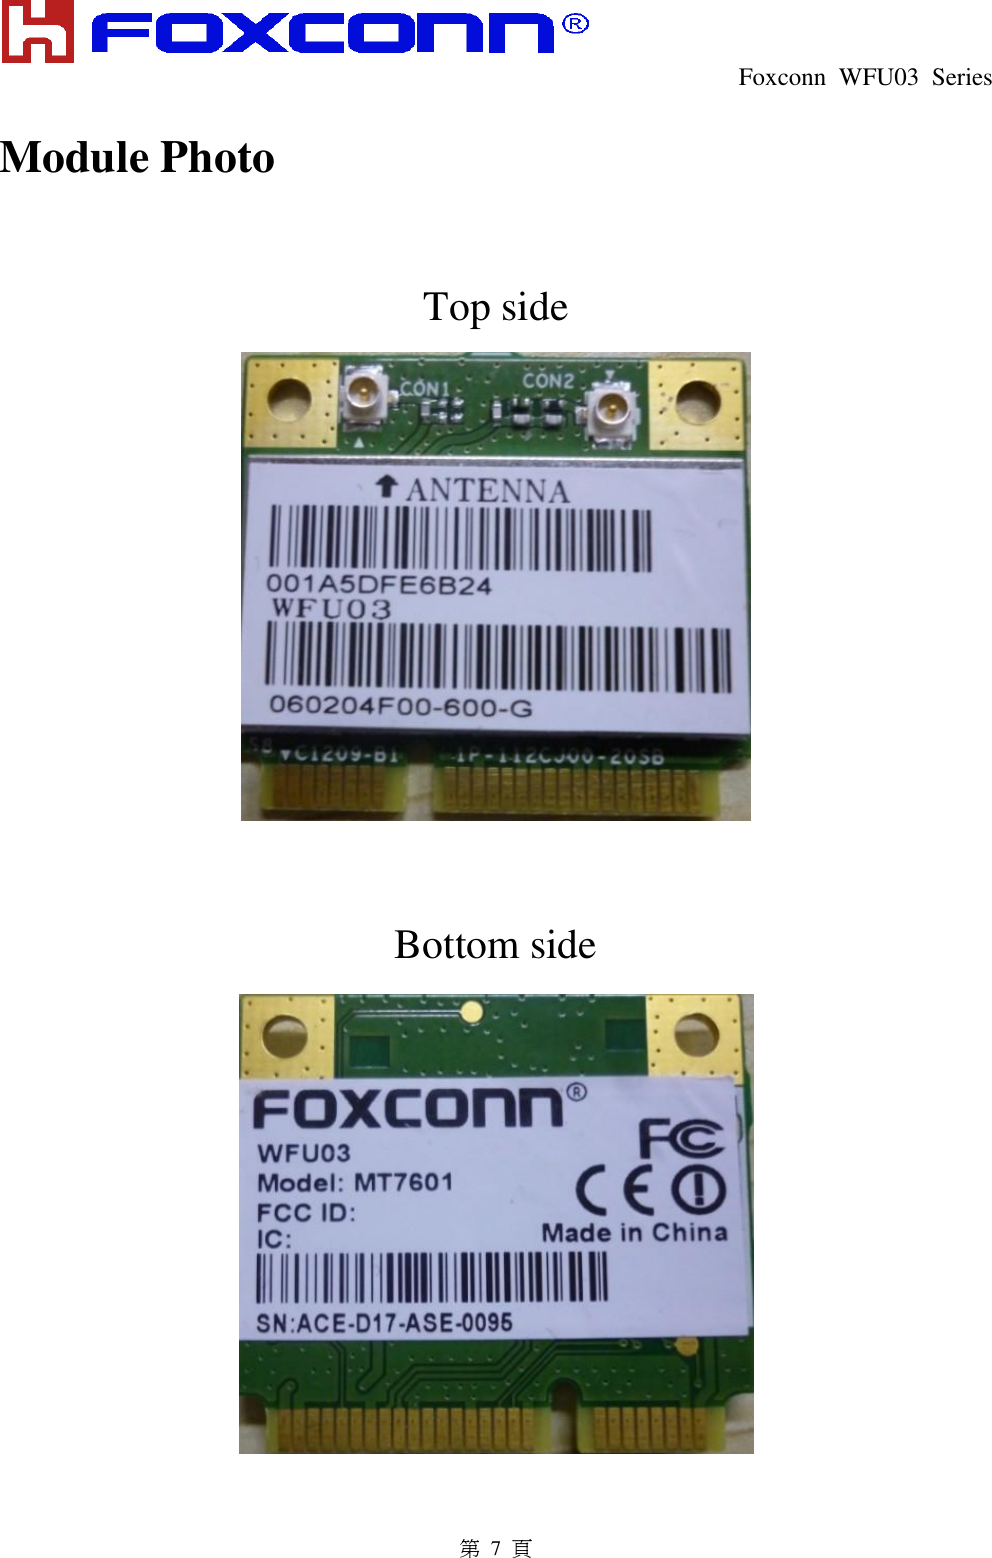  Foxconn  WFU03  Series   第 7 頁 Module Photo    Top side   Bottom side  